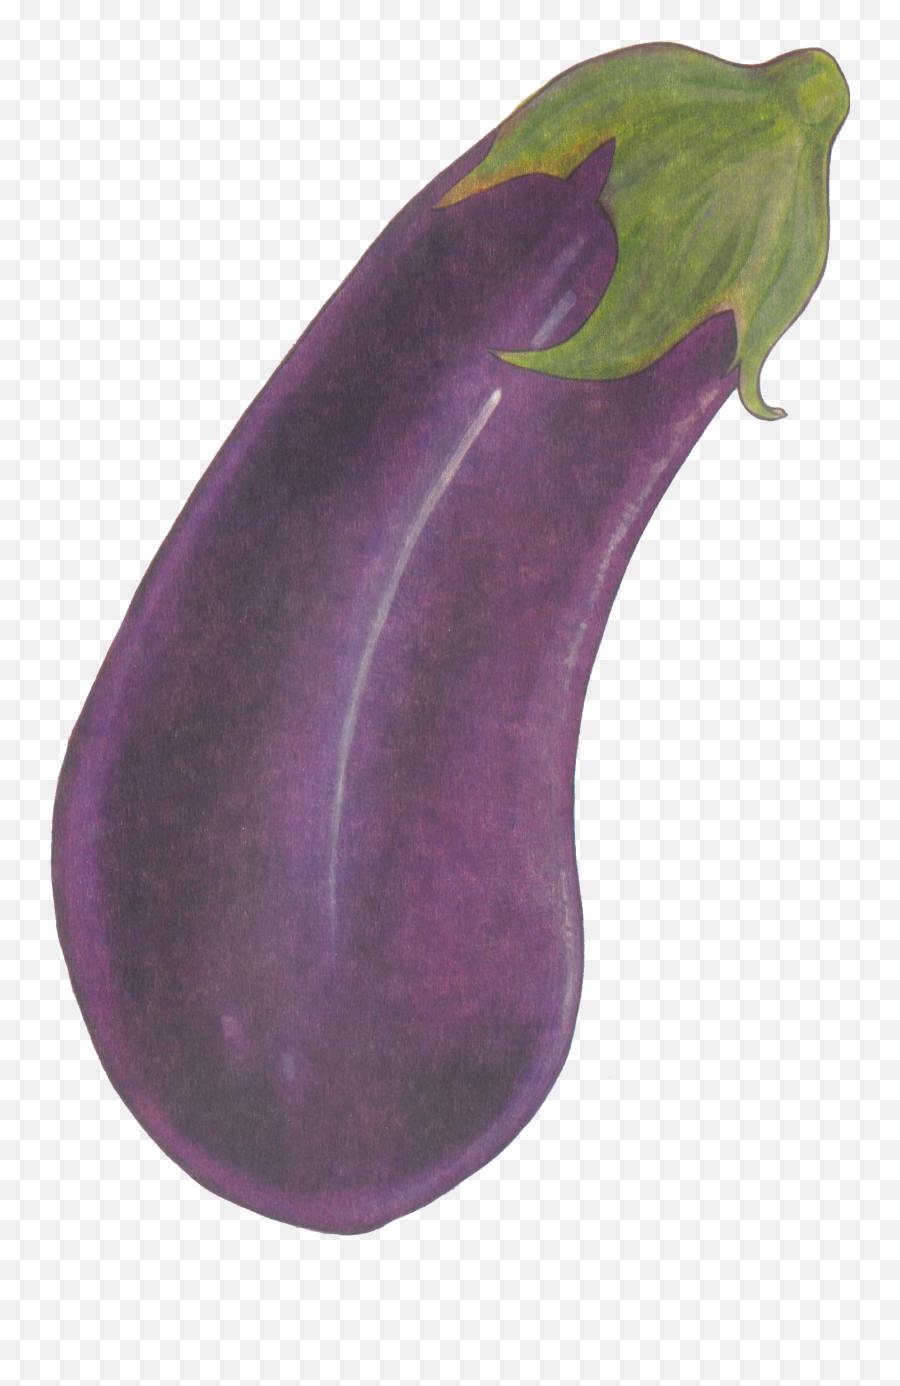 Eggplant Purple Health Love - Eggplant Png Download 1427 Eggplant,Eggplant Transparent Background